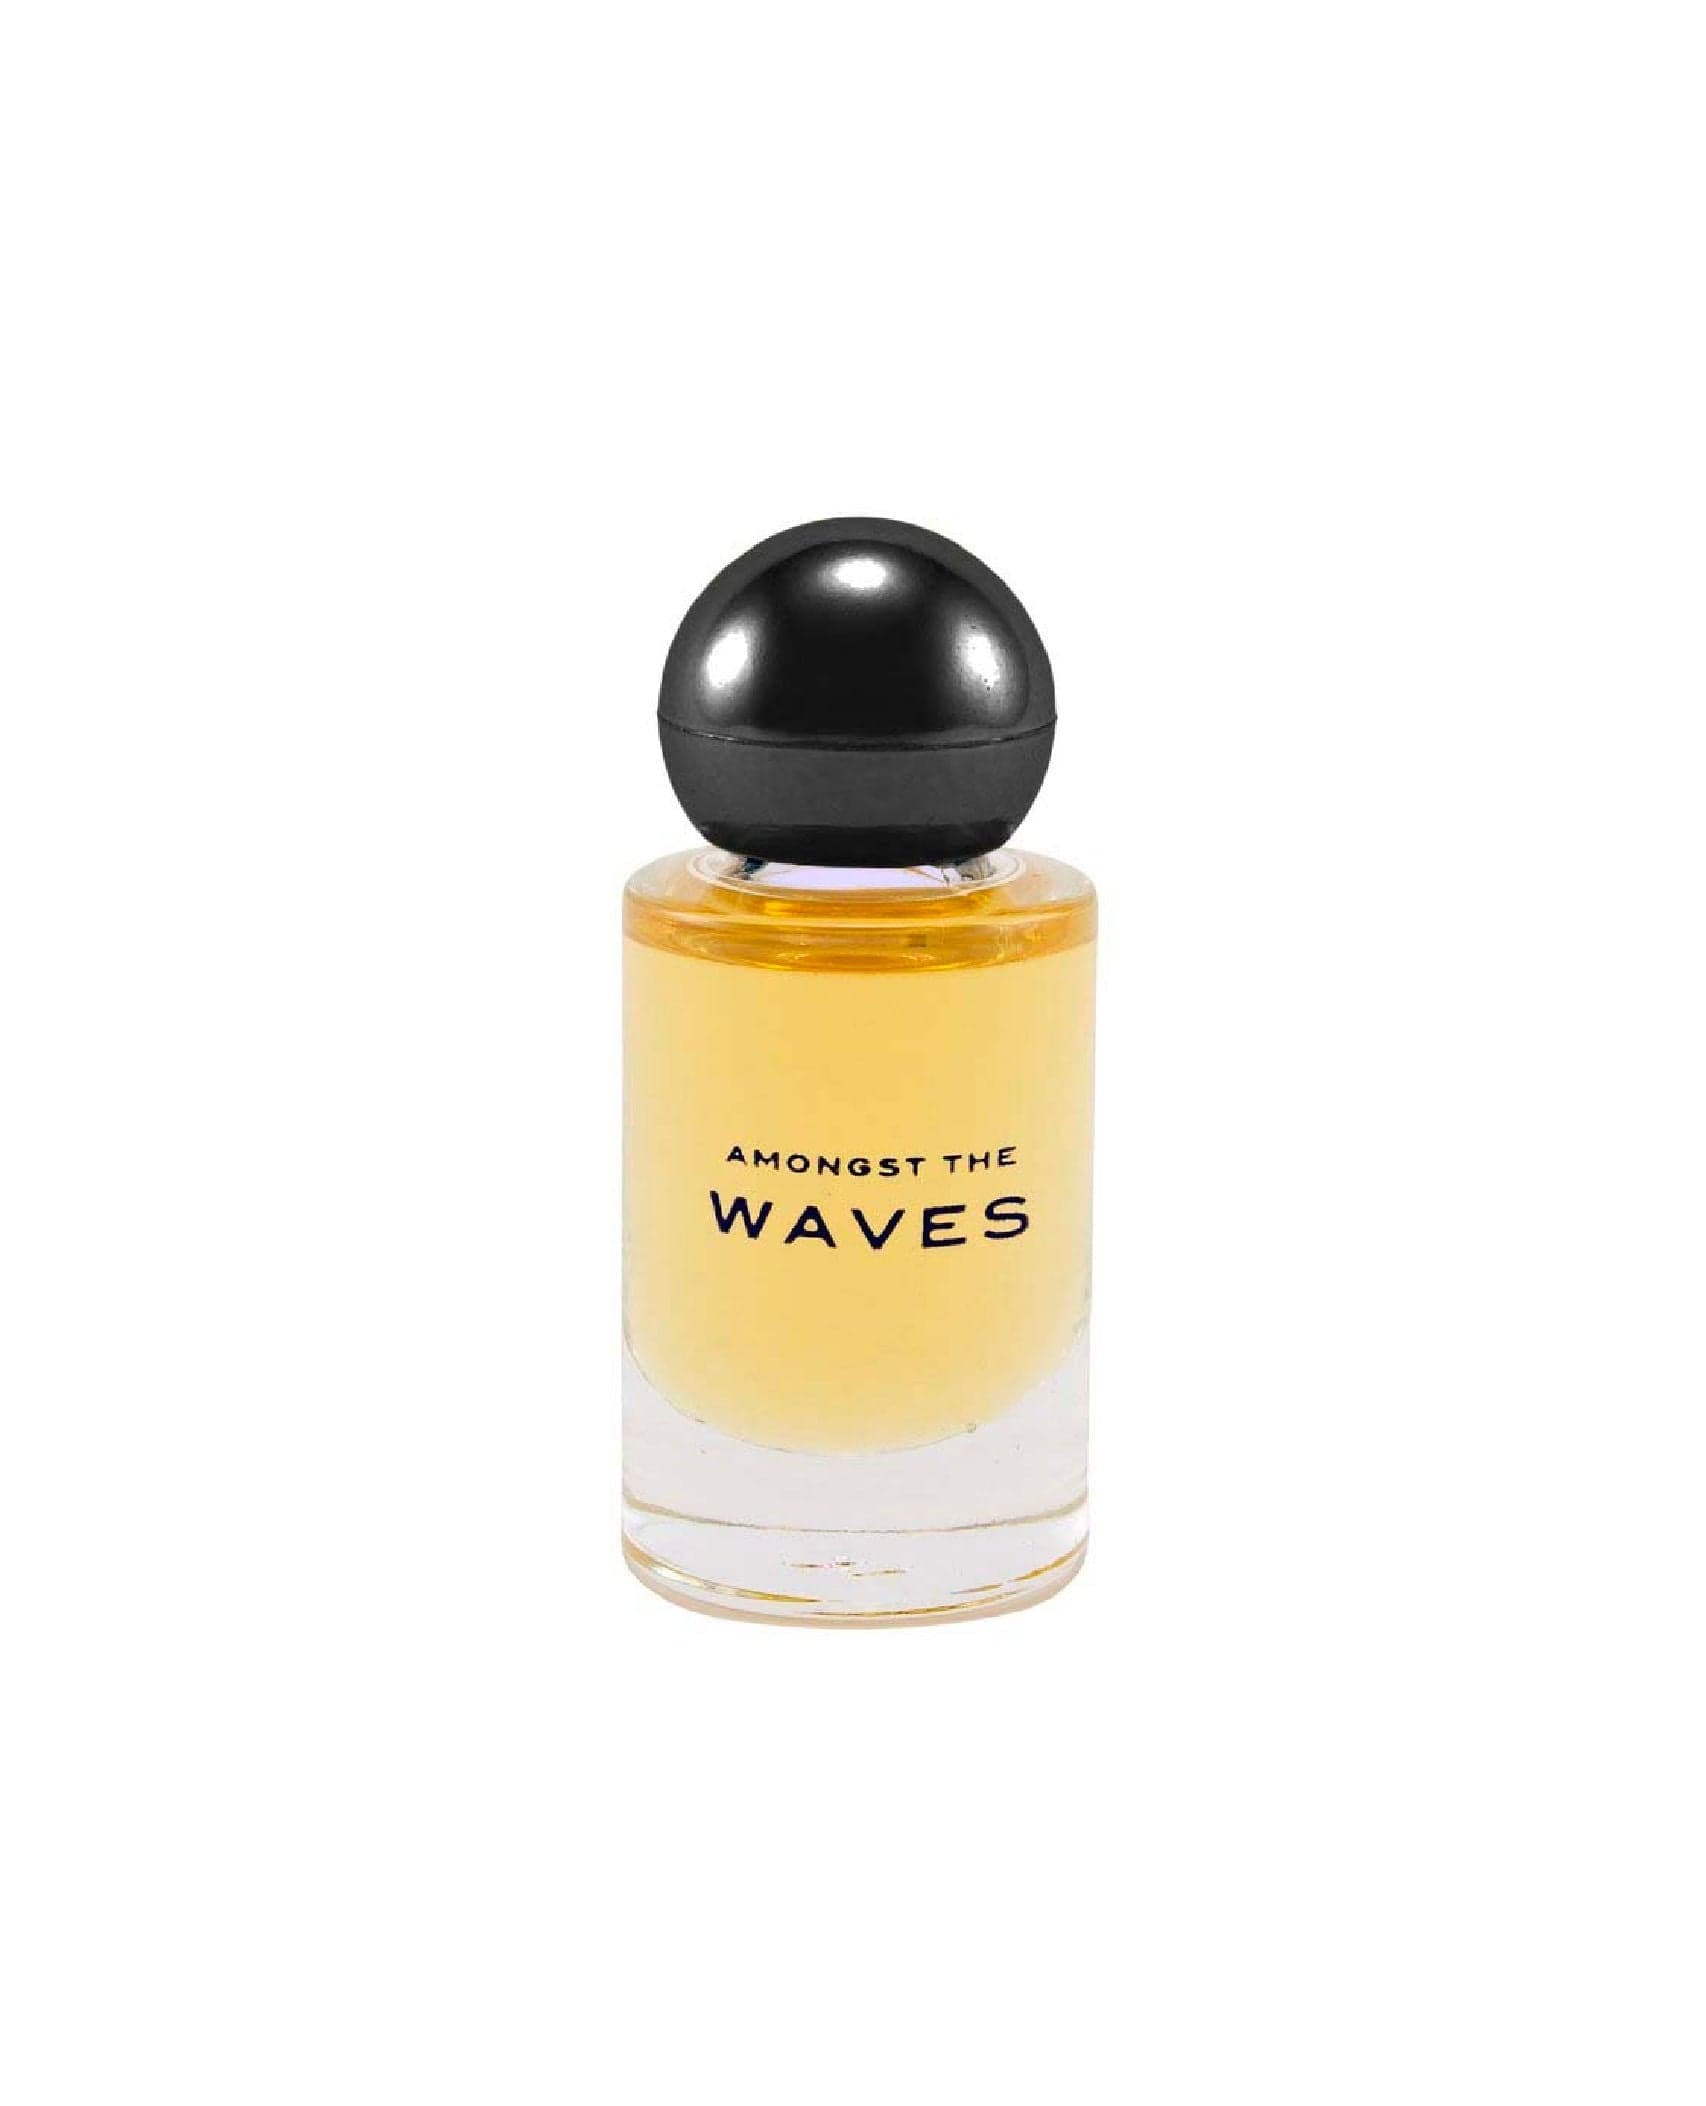 Amongst The Waves Eau de Parfum Small (5ml)